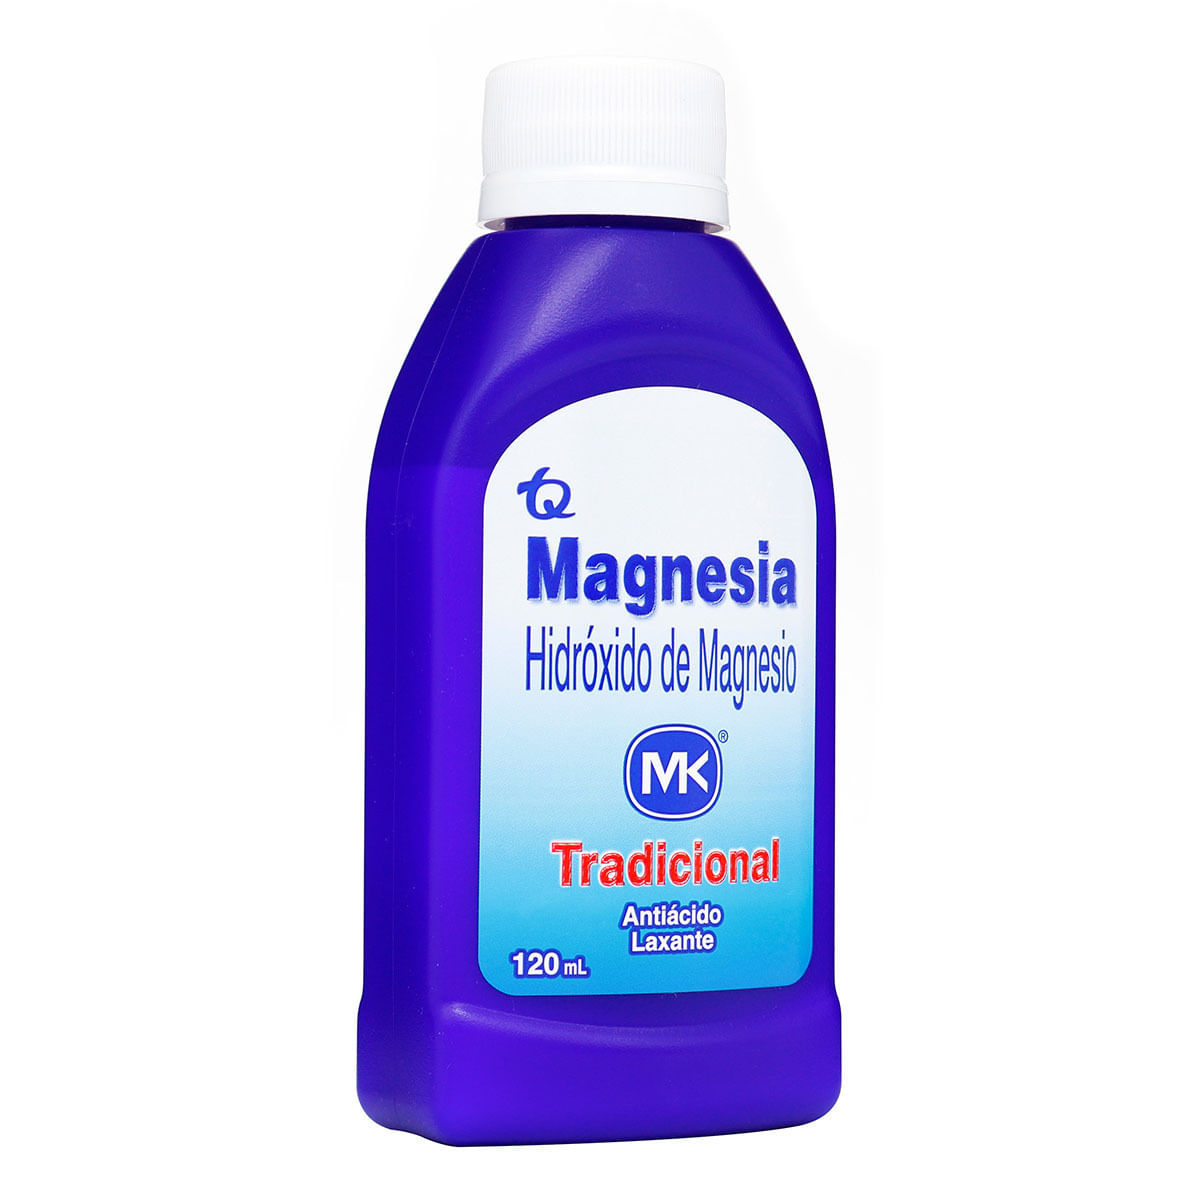 Desodorante de Leche de Magnesia.  Leche de magnesia, Desodorante